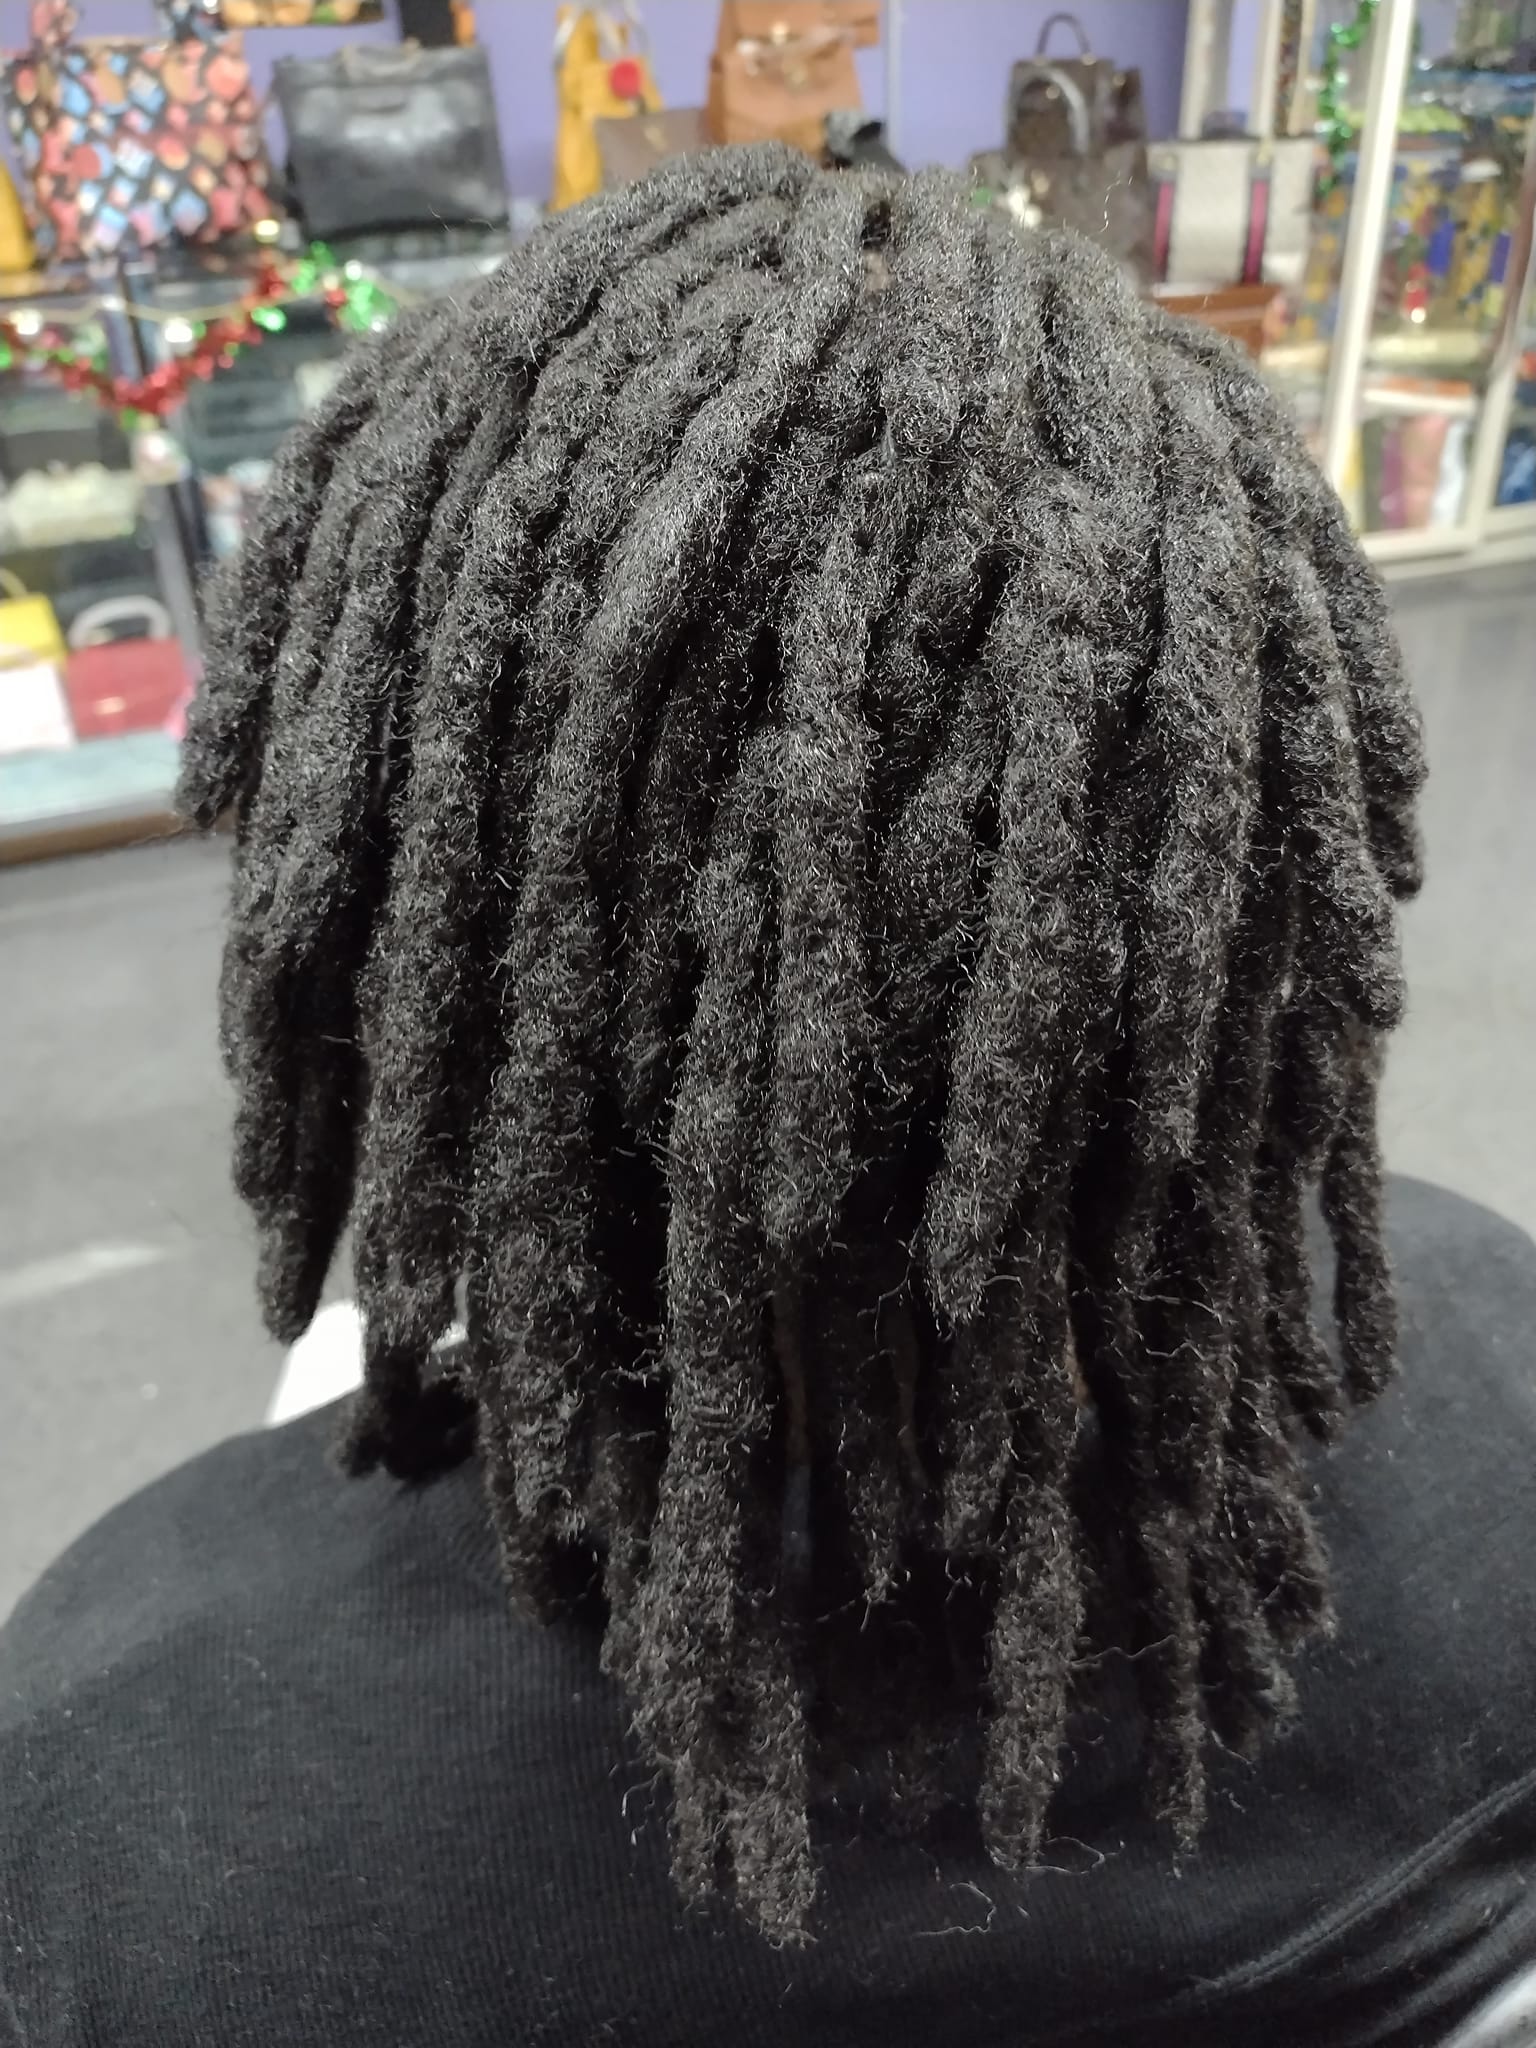 Mimi’s African Hair Braiding 20207 Harvard Ave, Warrensville Heights Ohio 44122